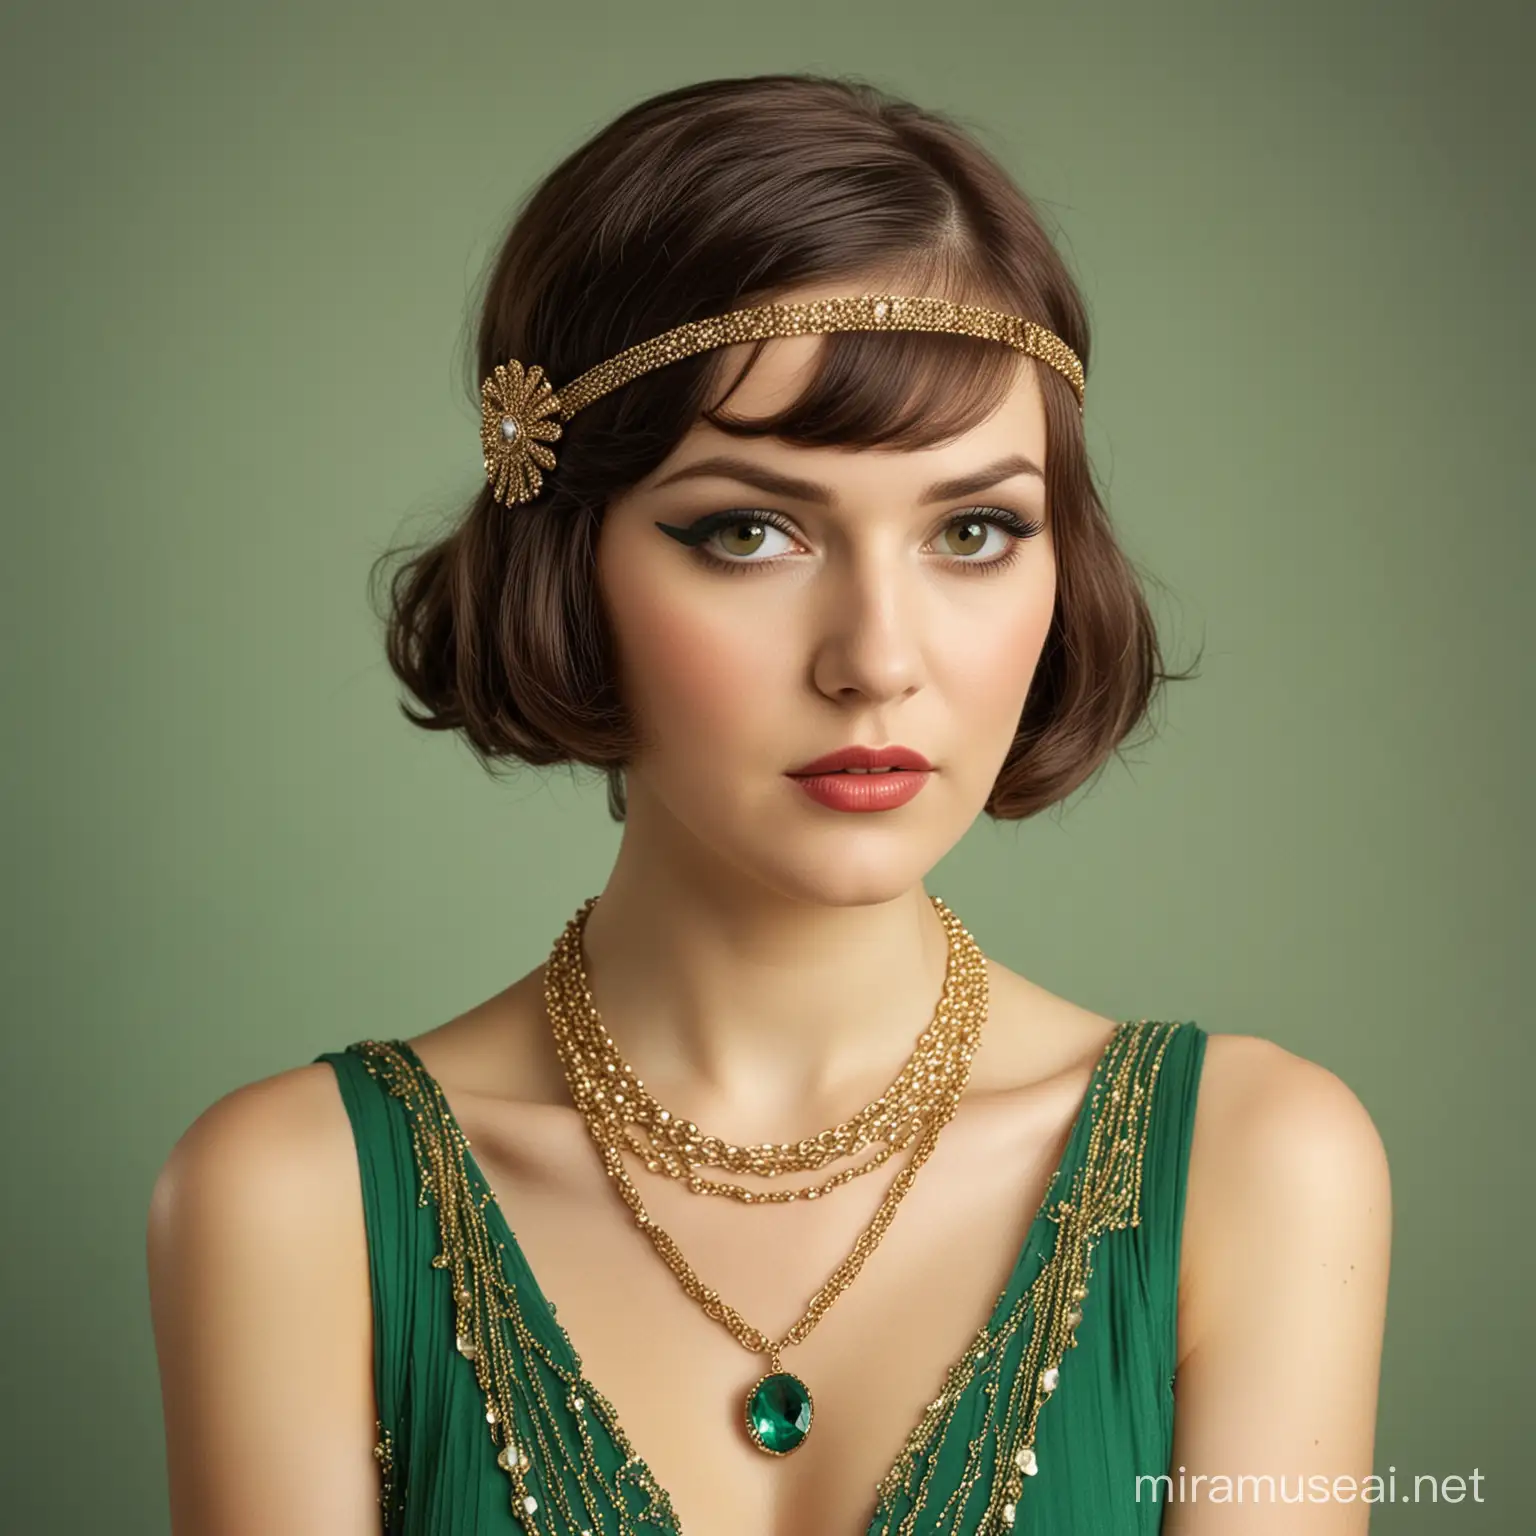 art deco flapper beautiful woman in green dress gold jewelry unhappy